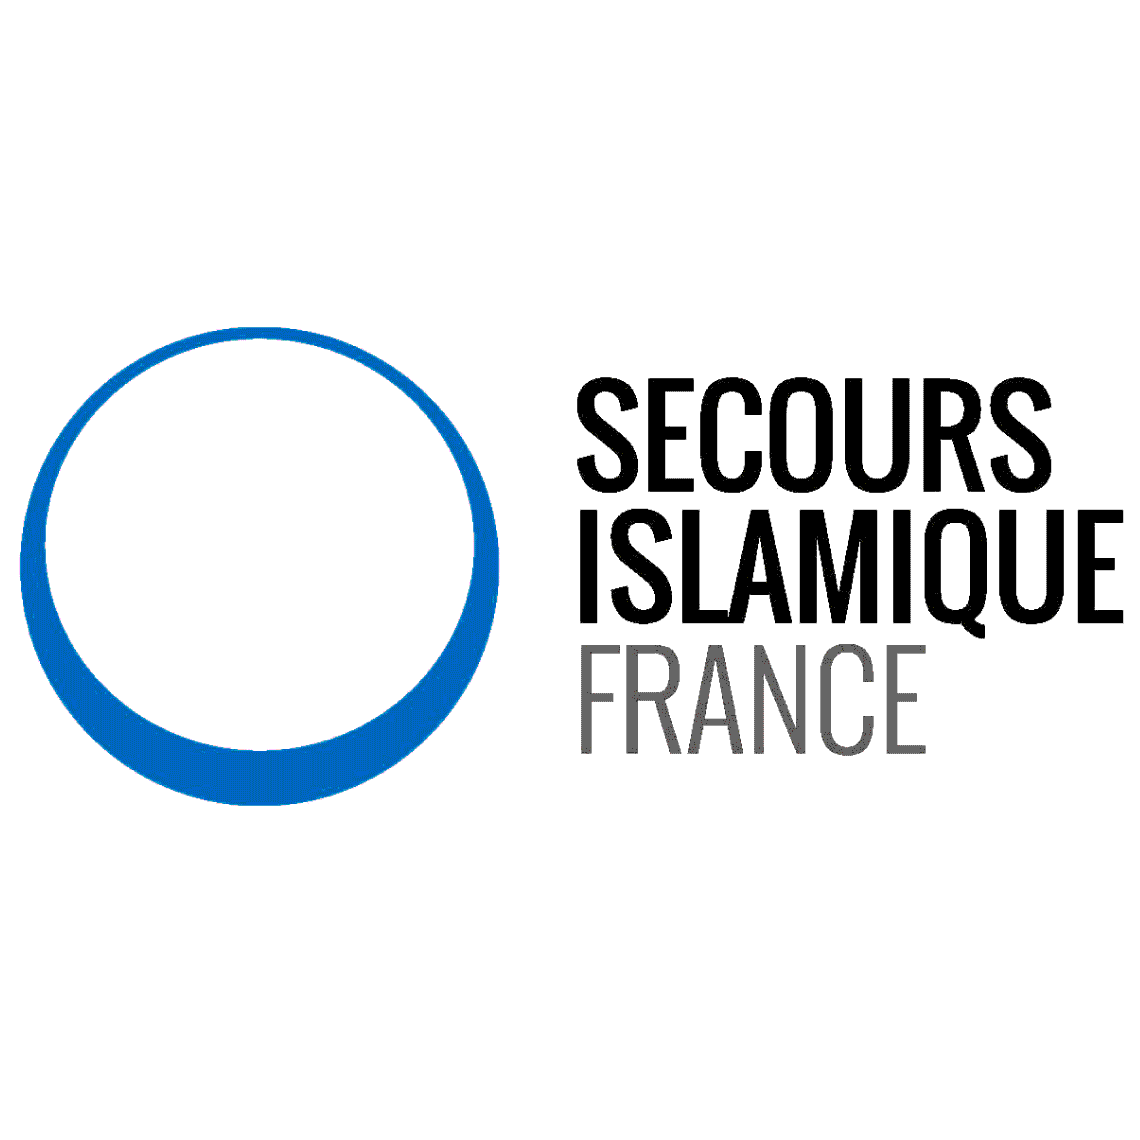 Secours Islamique France (SIF)